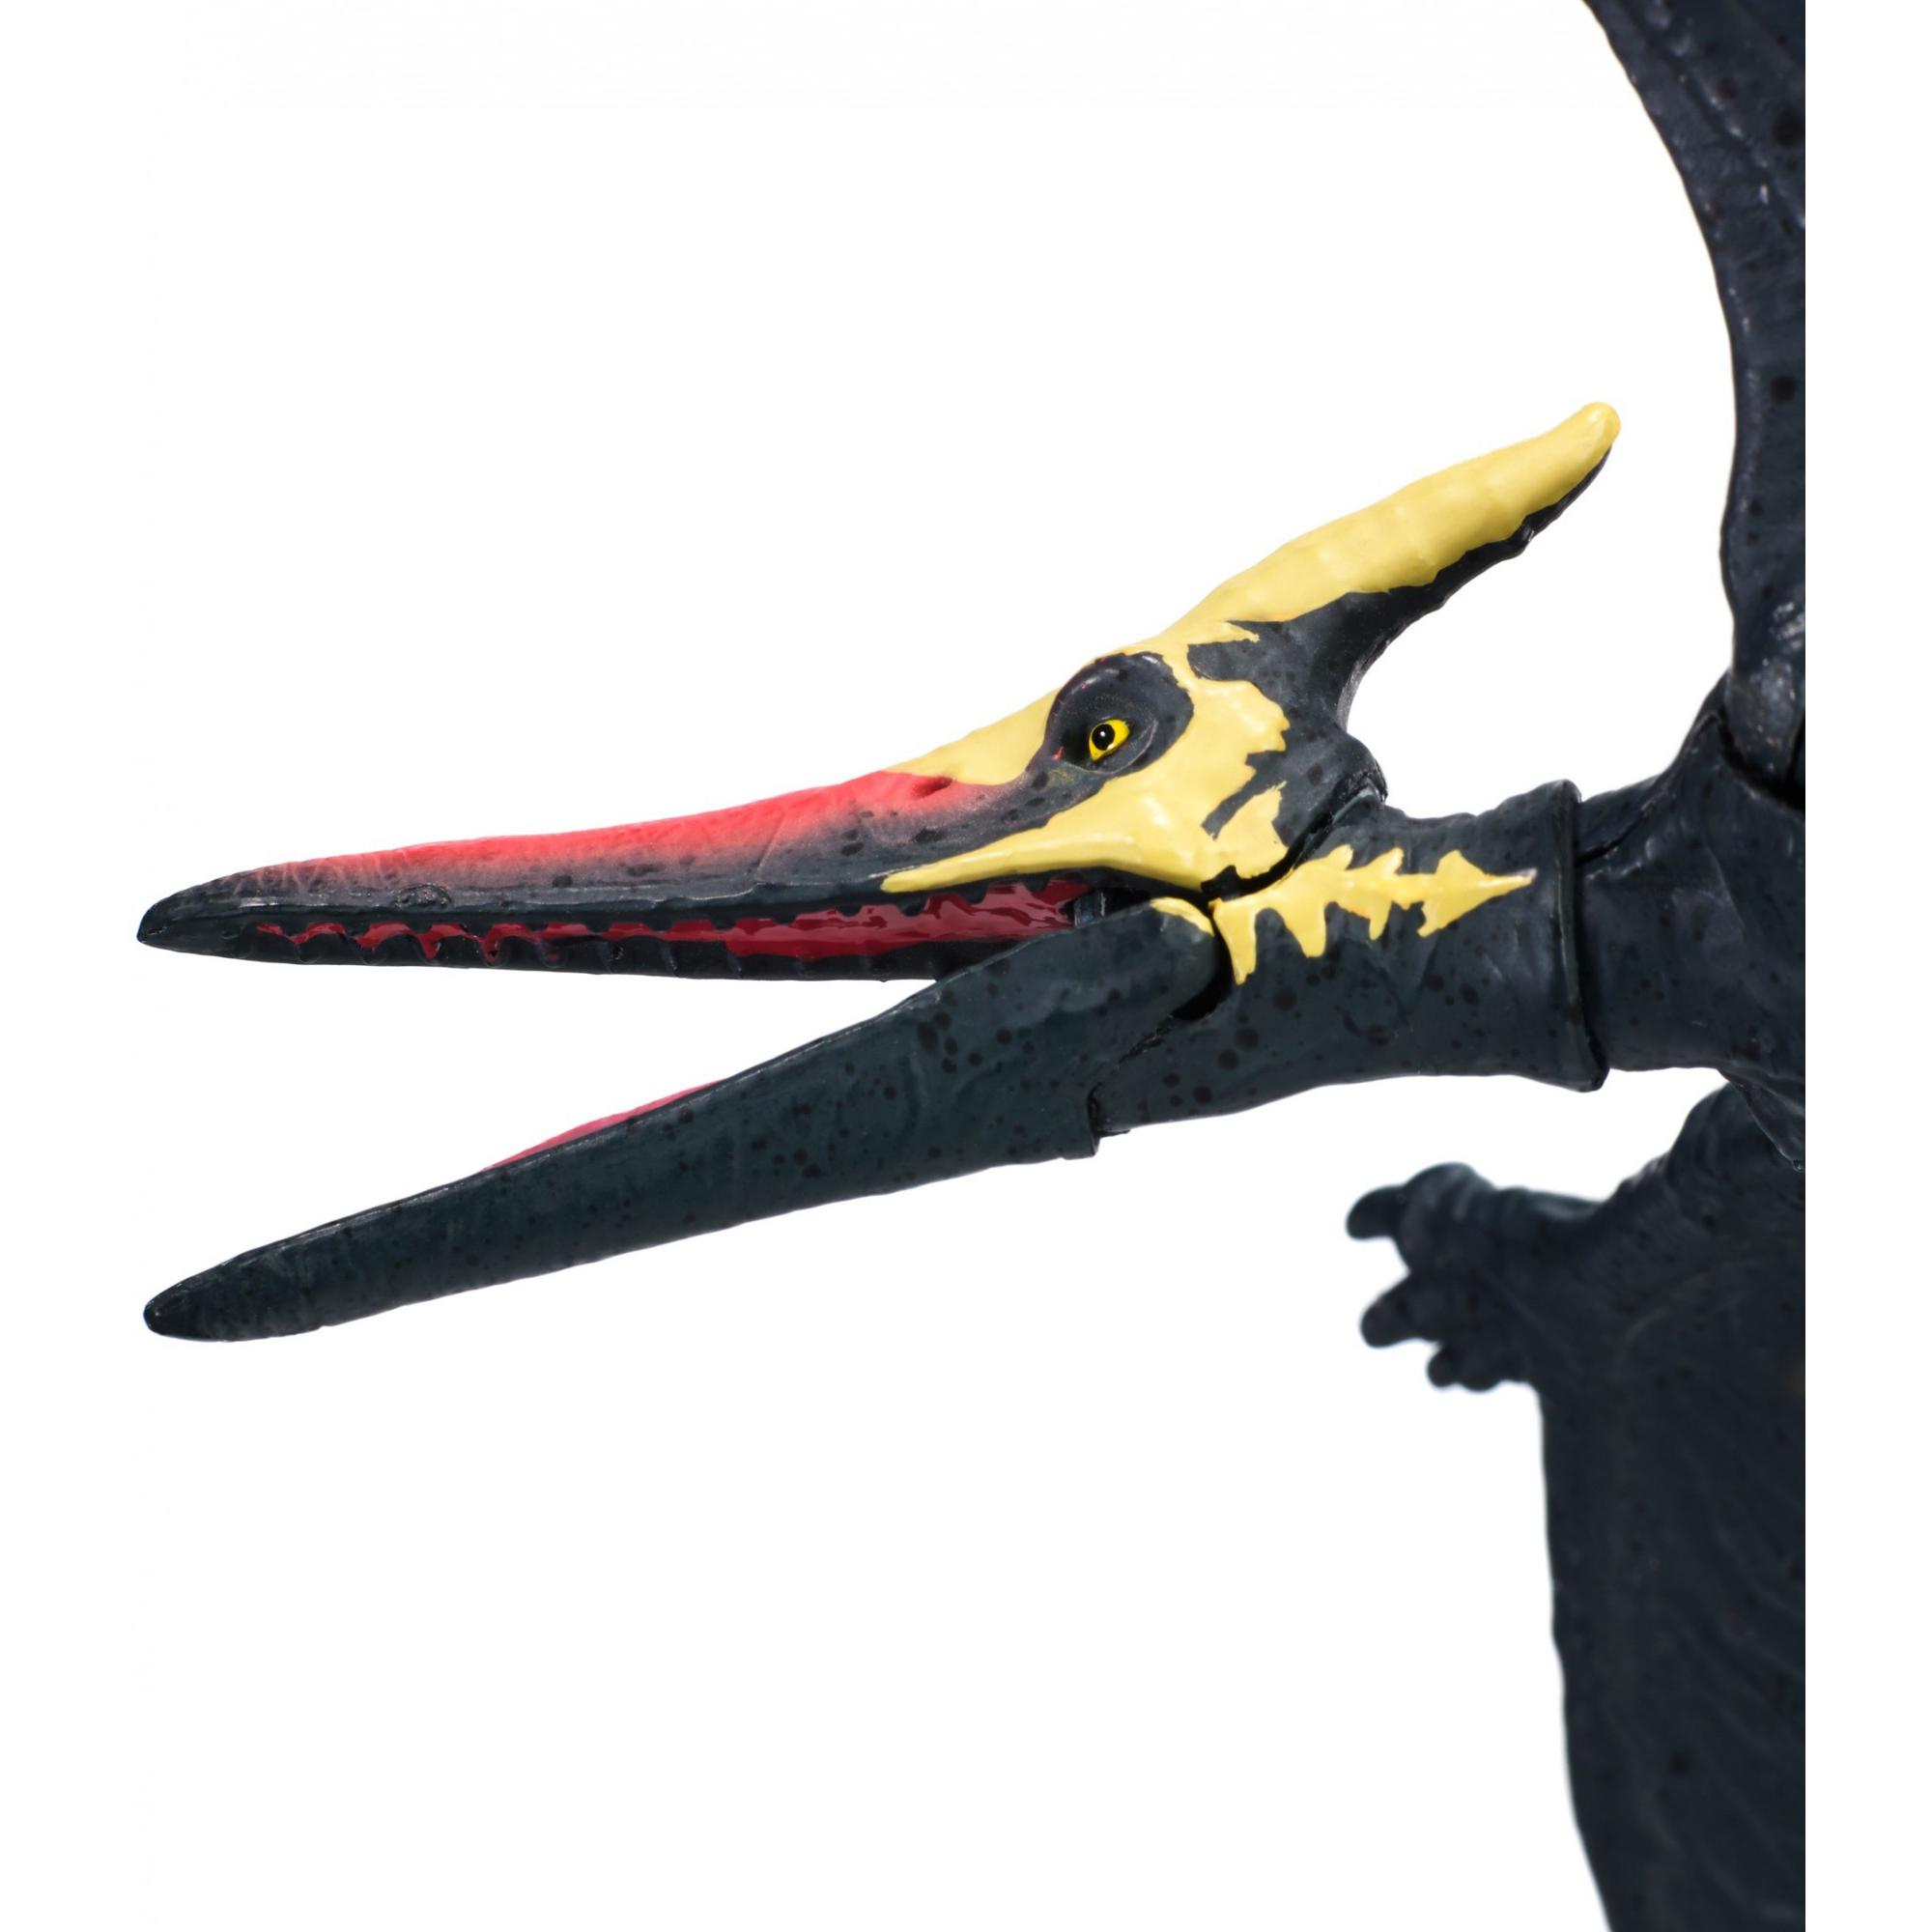 Jurassic World Battle Damage Pteraodon Dinosaur Action Figure - image 3 of 7